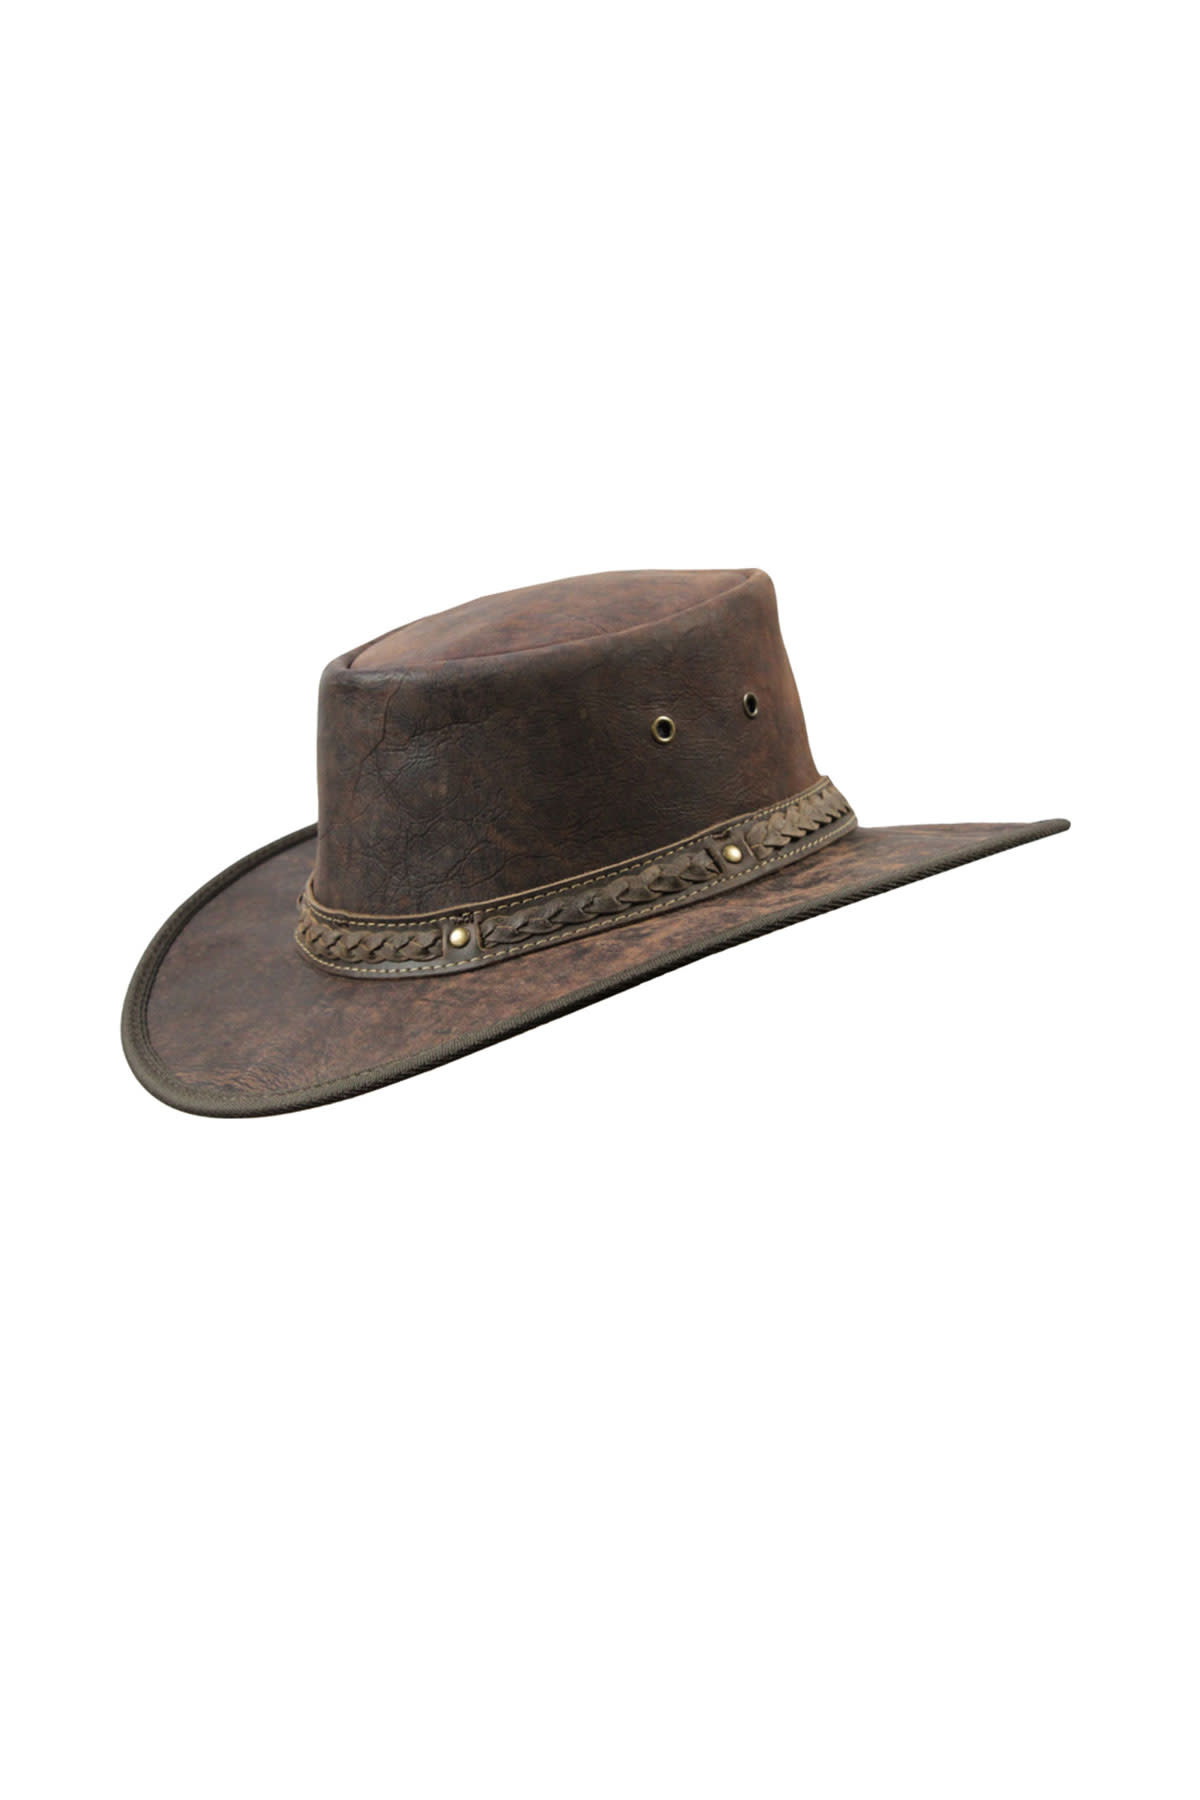 Barmah Crackle Kangaroo Leather Hat  Roxann's Hats of Fort Langley - Roxanns  Hats of Fort Langley